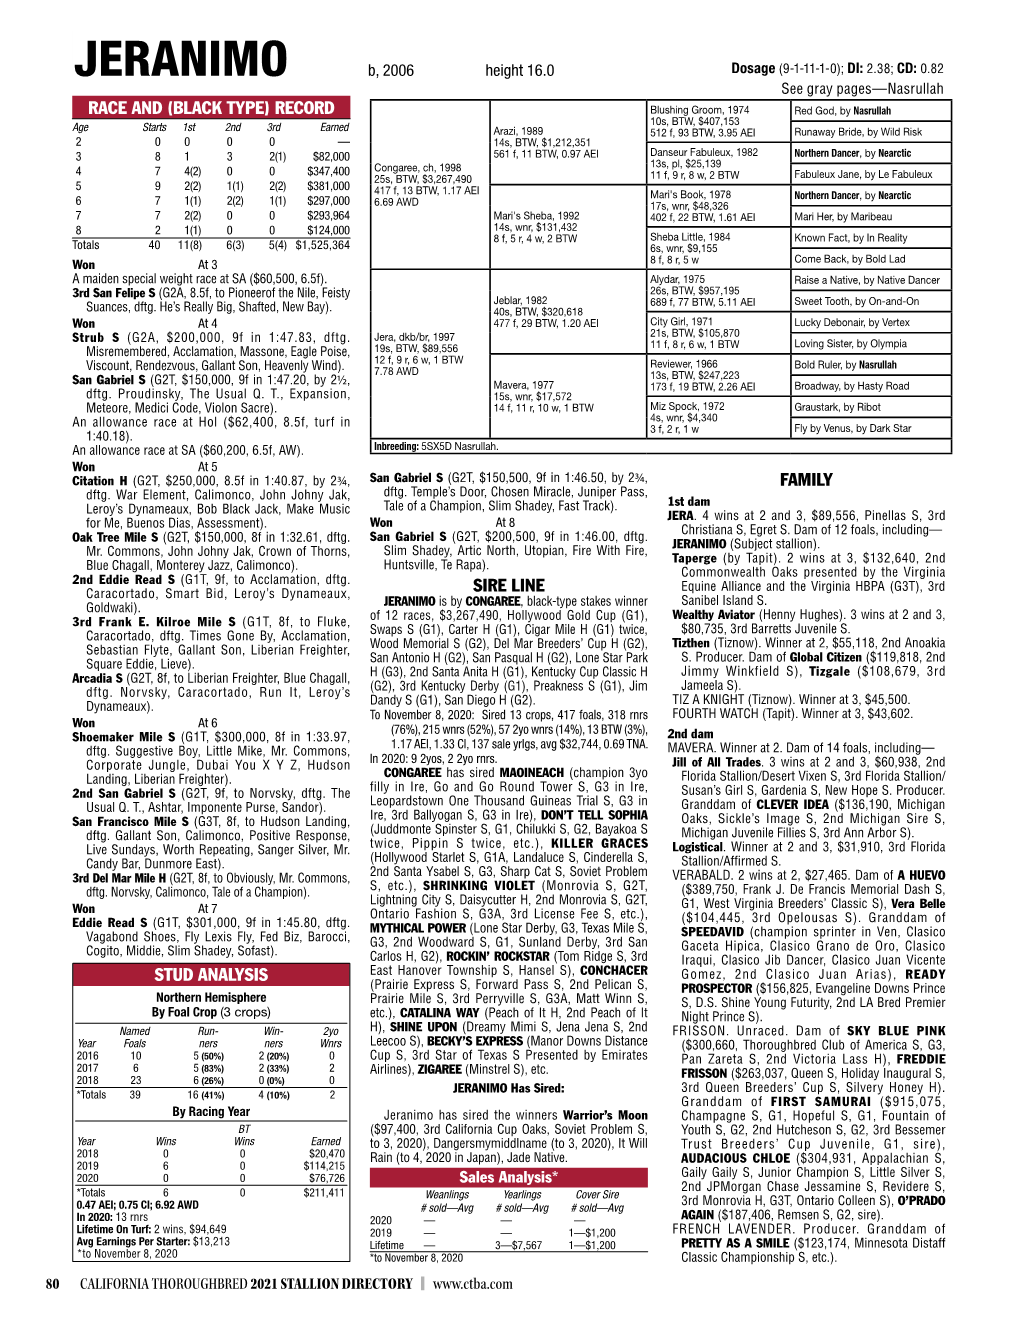 California Thoroughbred Stallion Directory